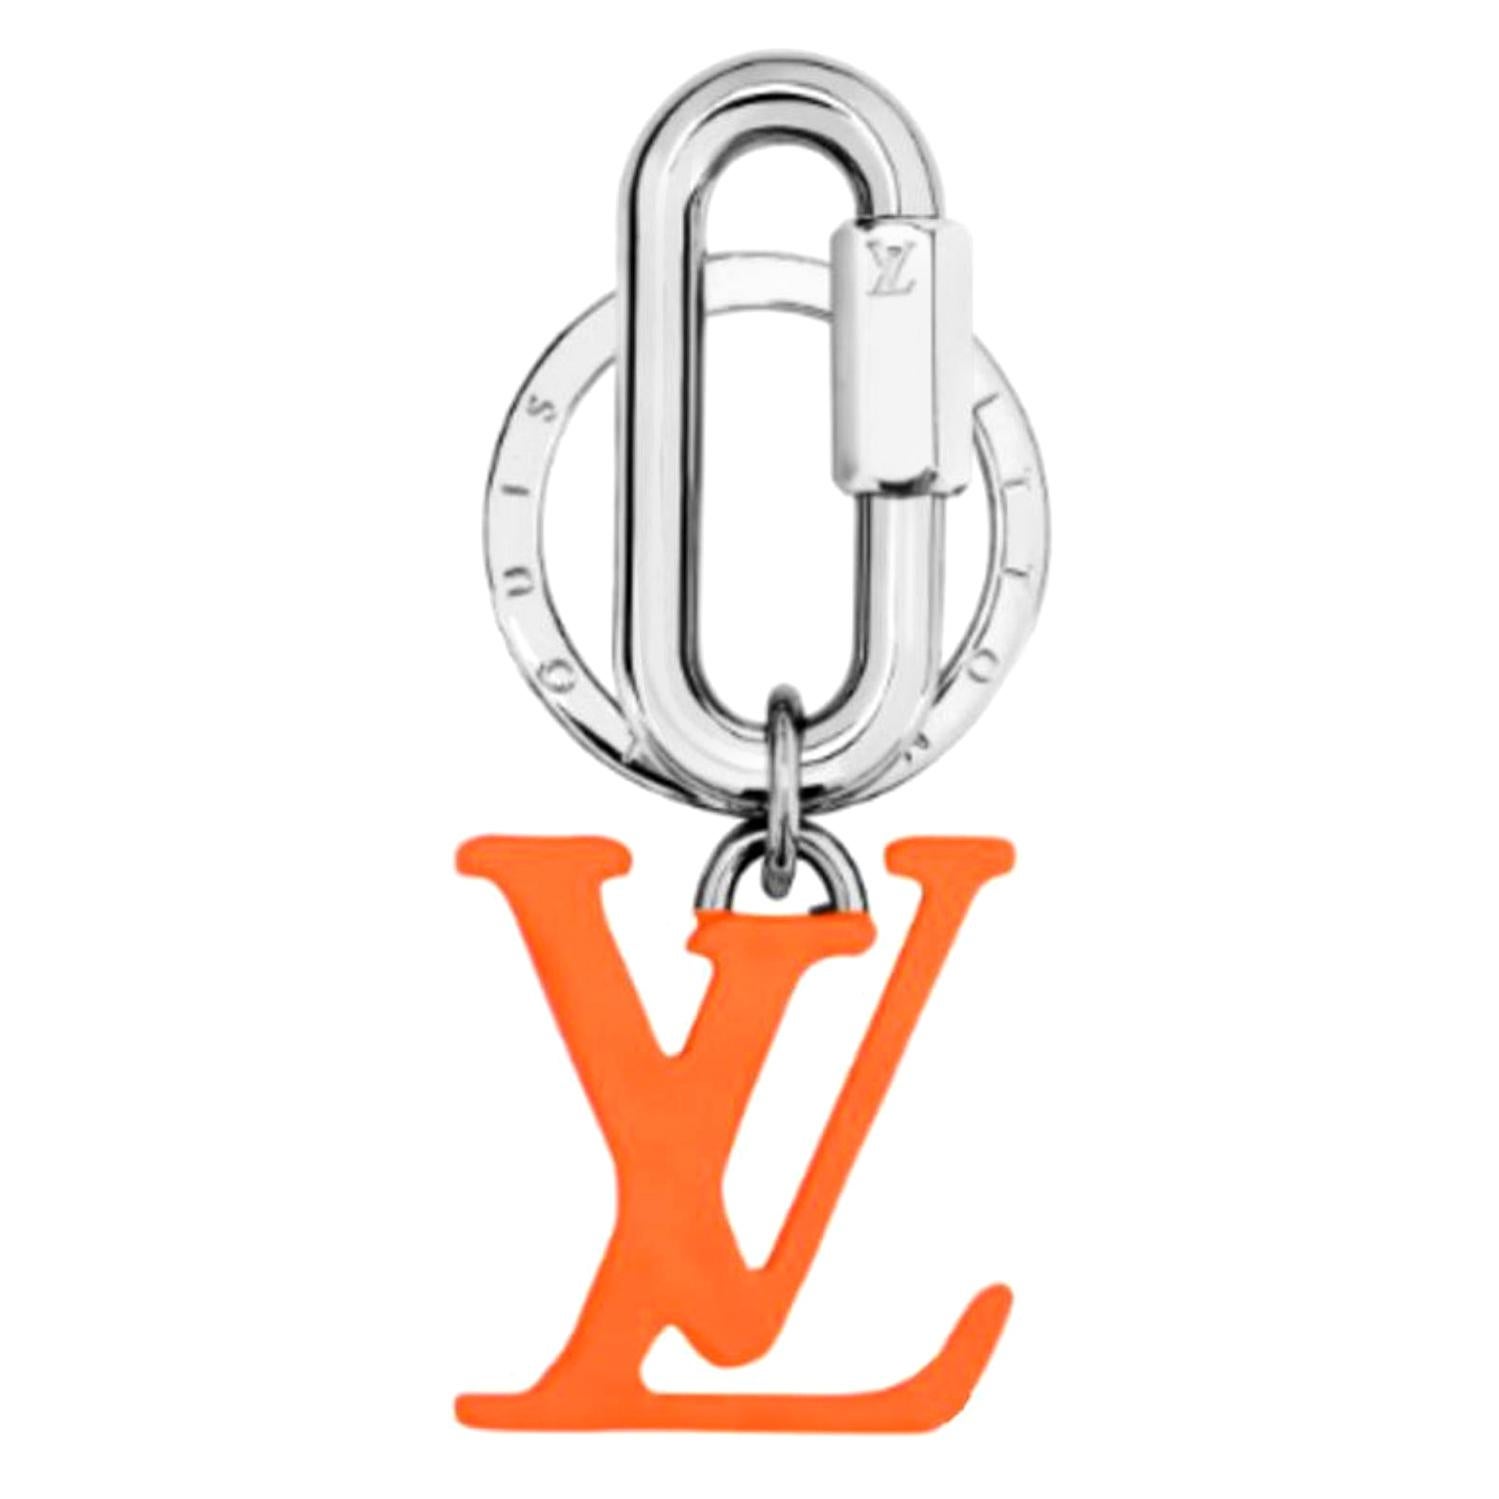 Louis Vuitton Abloh Ss19 Lv Initial Key Chain Ring Bag Pendant 118le0110 Charm For Sale